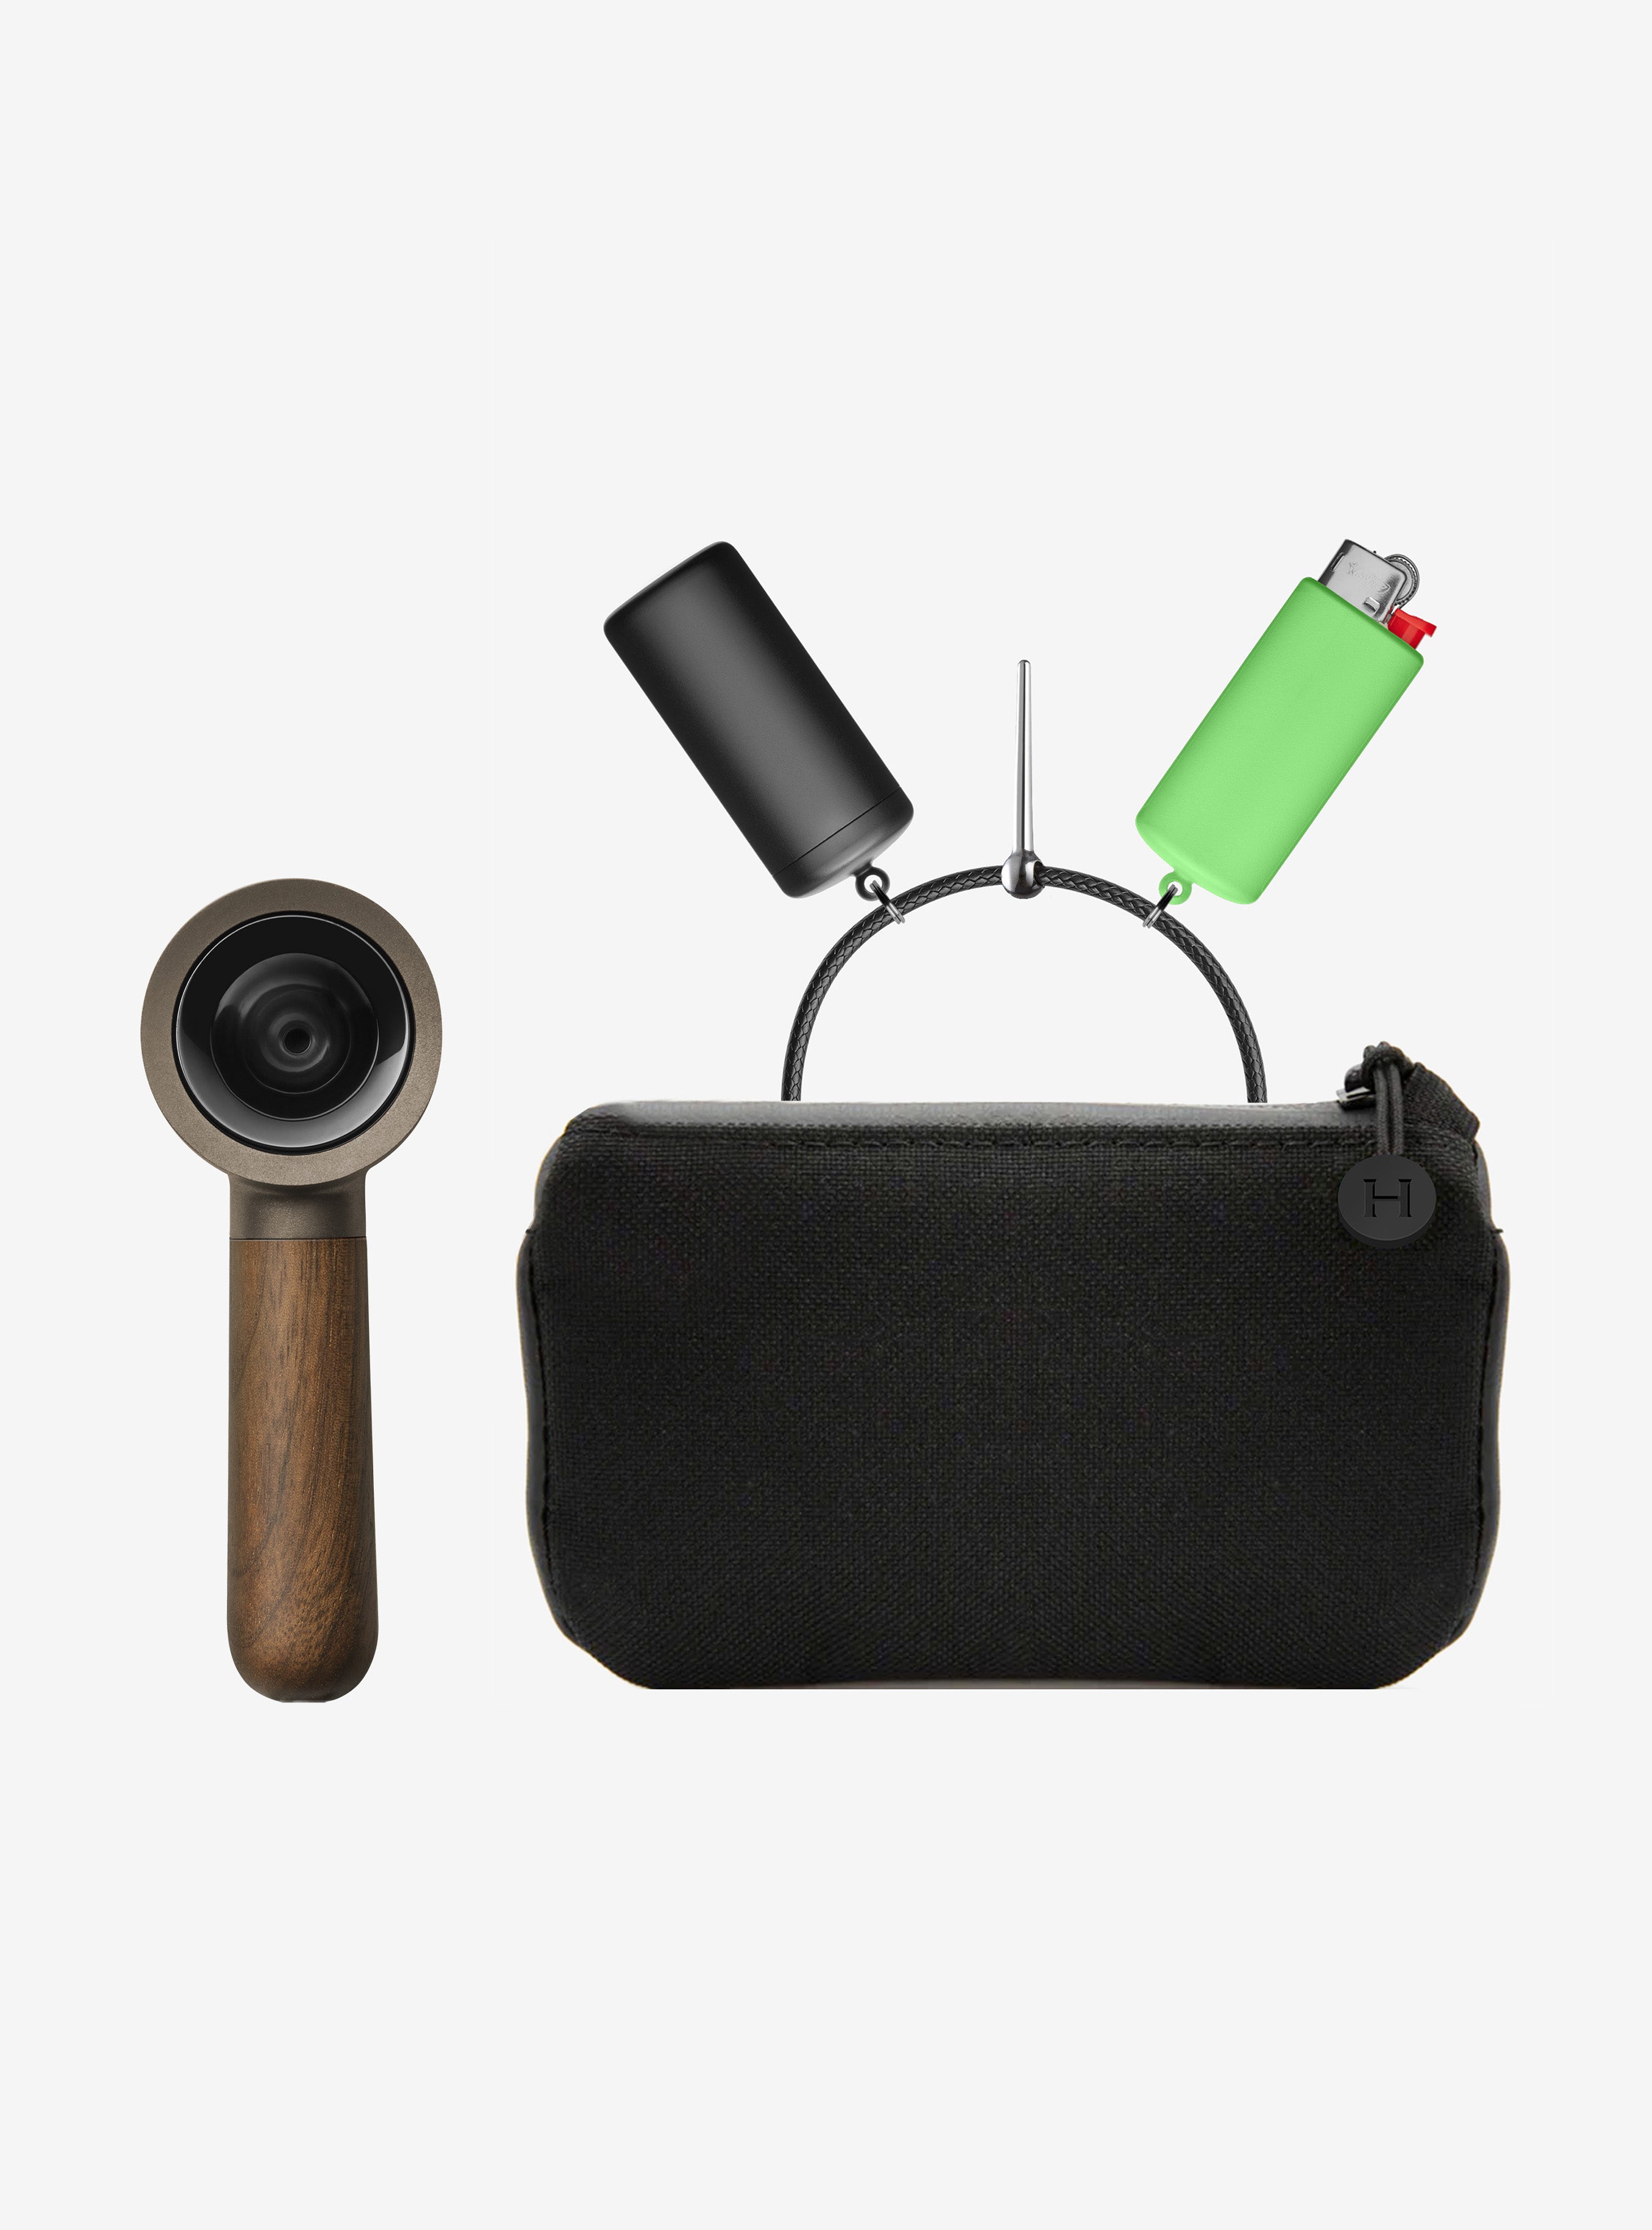 Handpipe & Field Kit